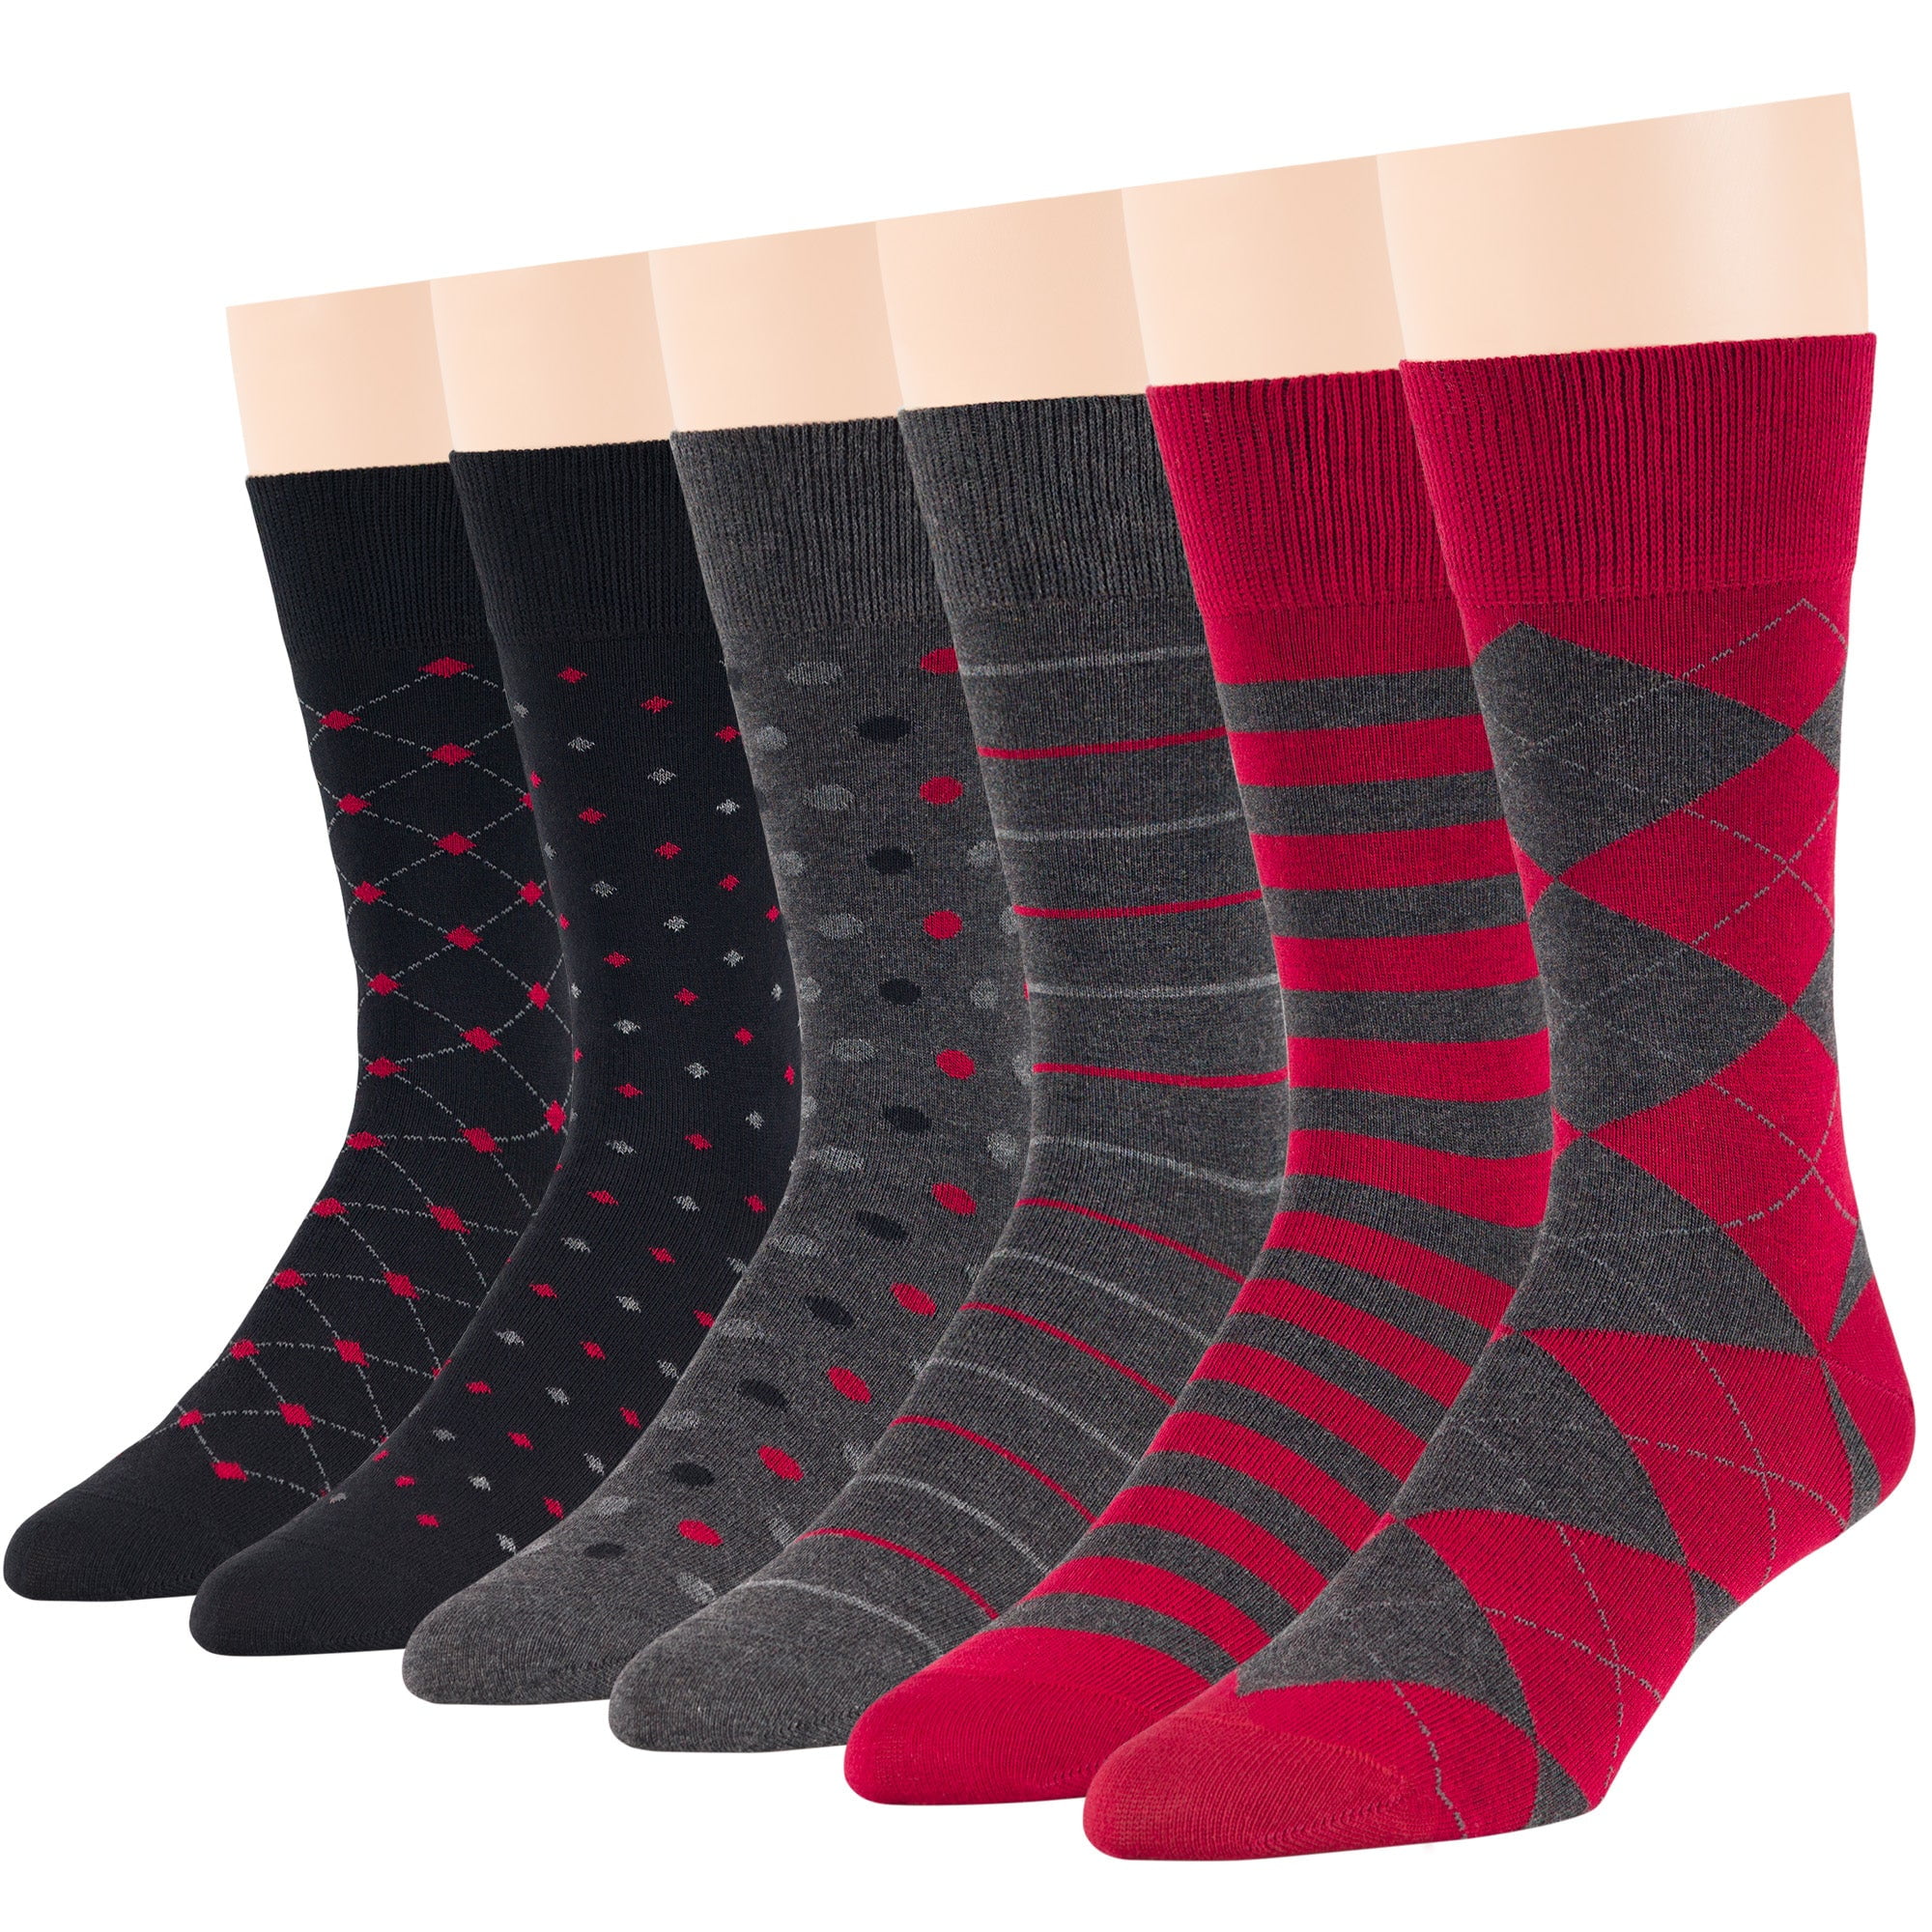 7Bigstars Kingdom Men's Dress Socks Cotton -6 pack- Novelty Casual ...